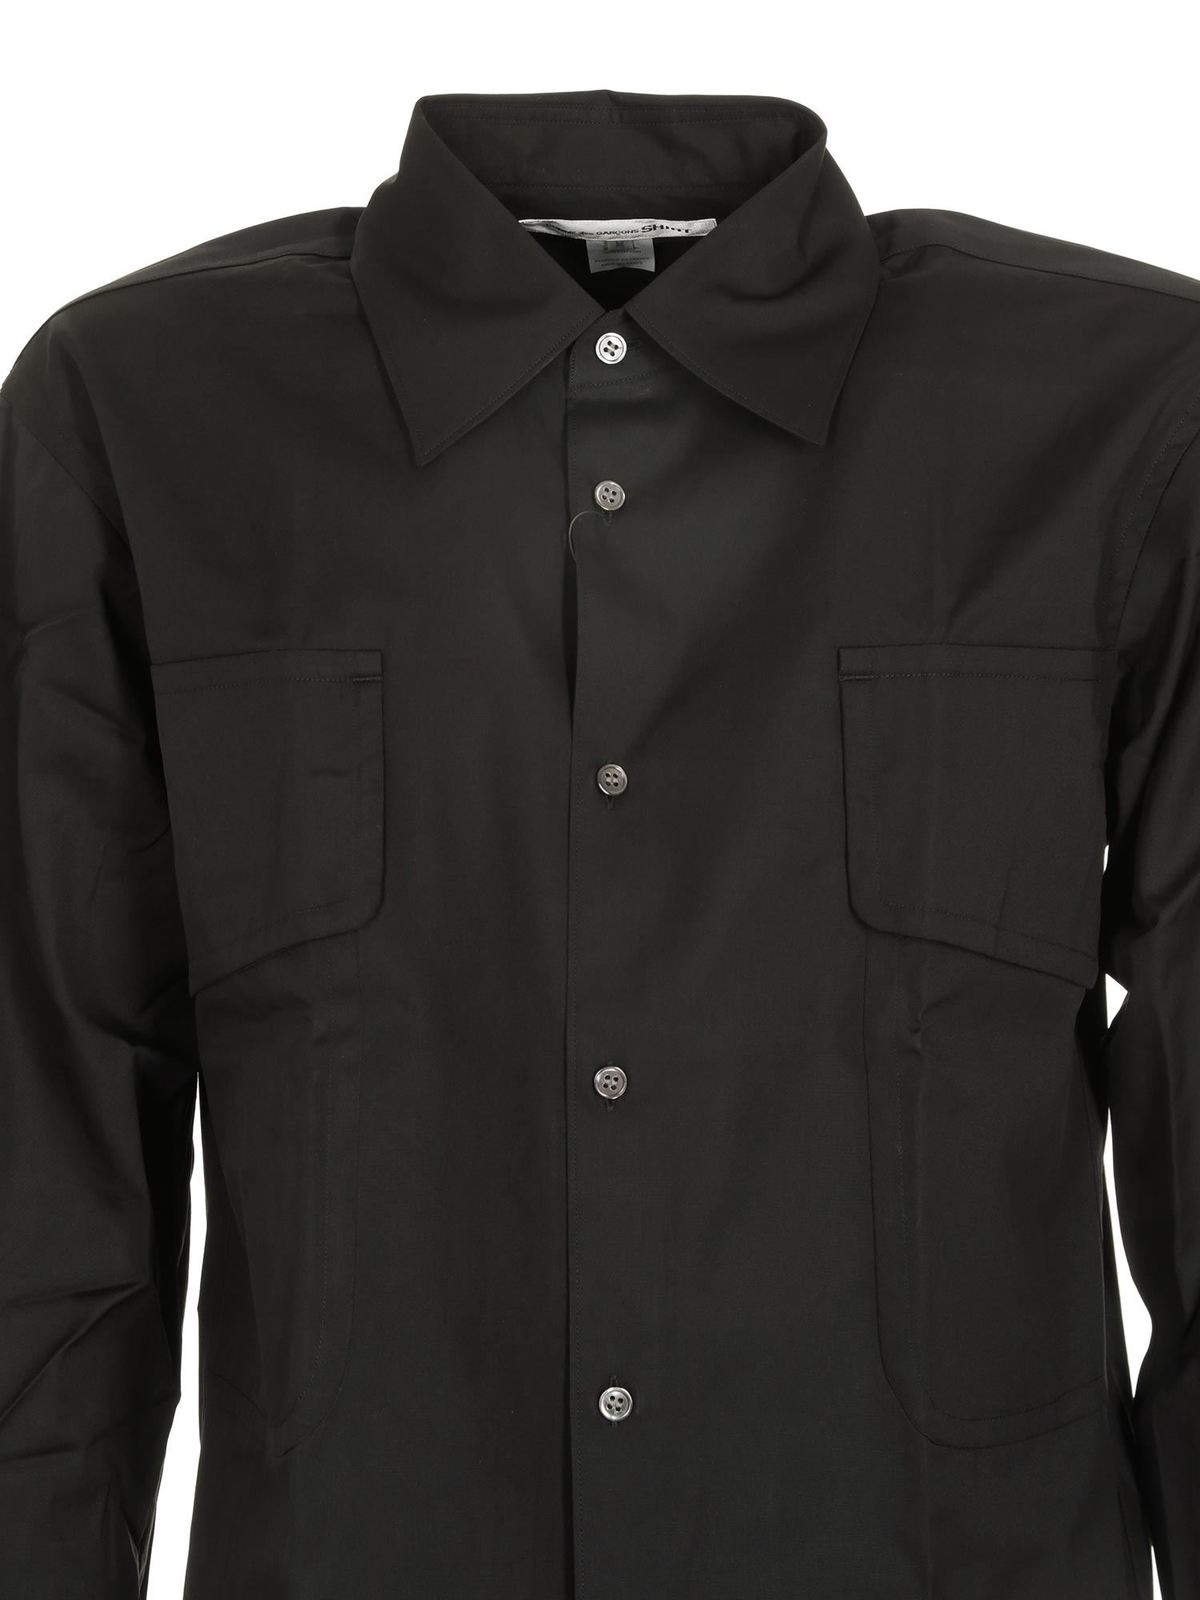 Shirts Comme Des Garcons Shirt - Chest pockets shirt in black